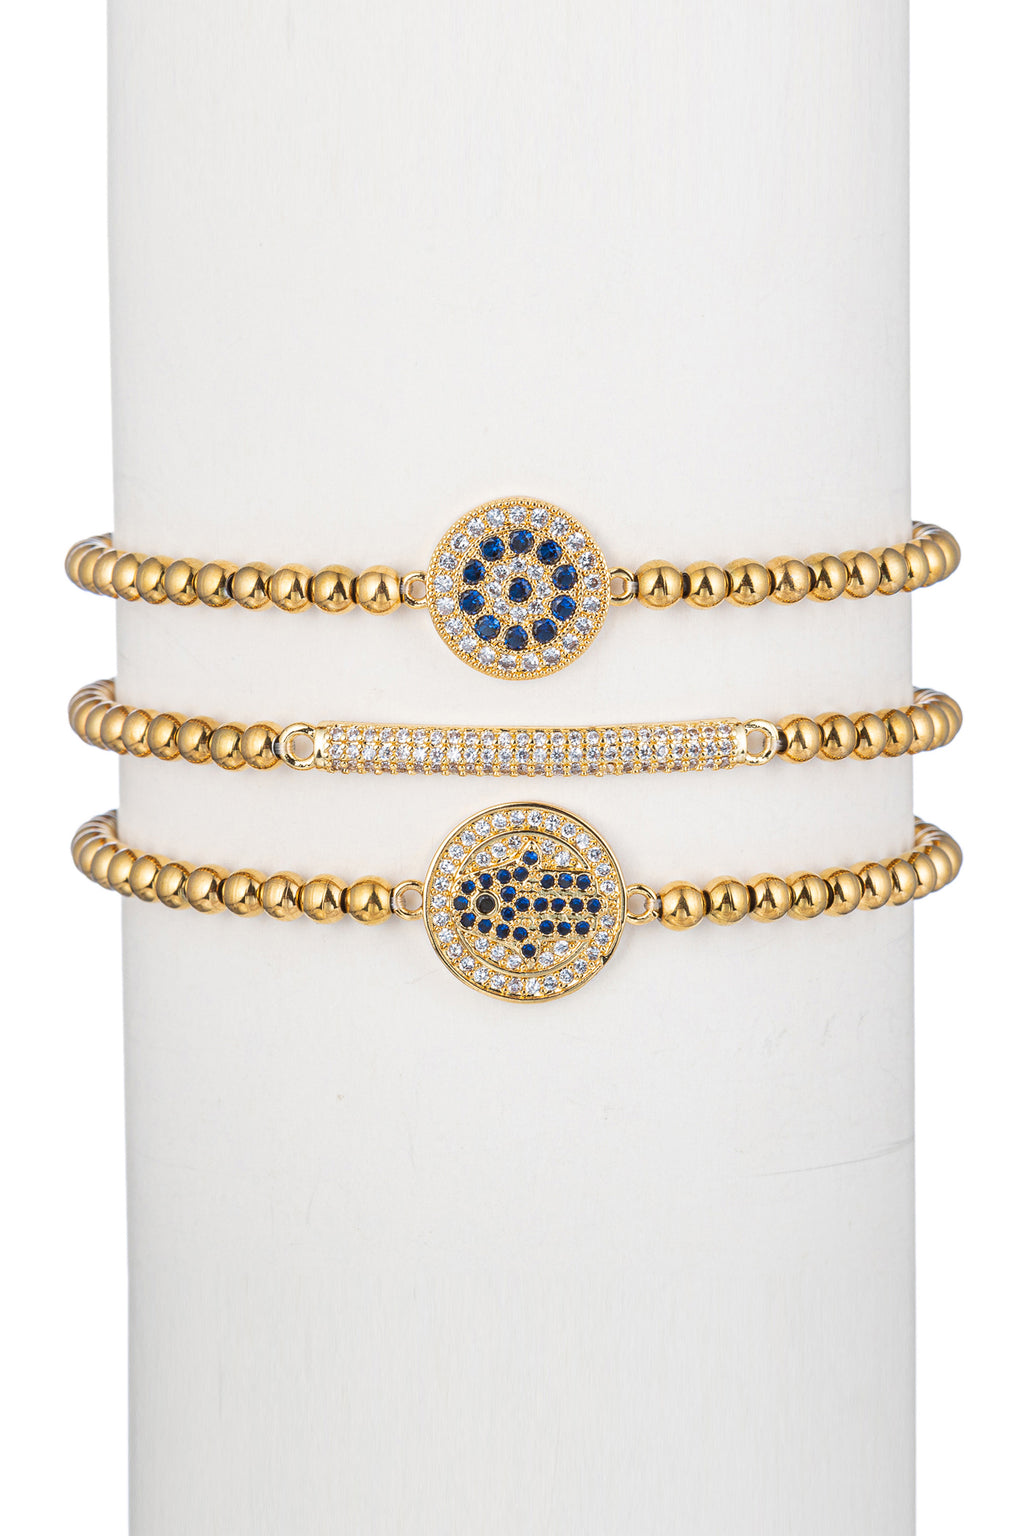 3-piece titanium beaded bracelet set studded with CZ crystals.